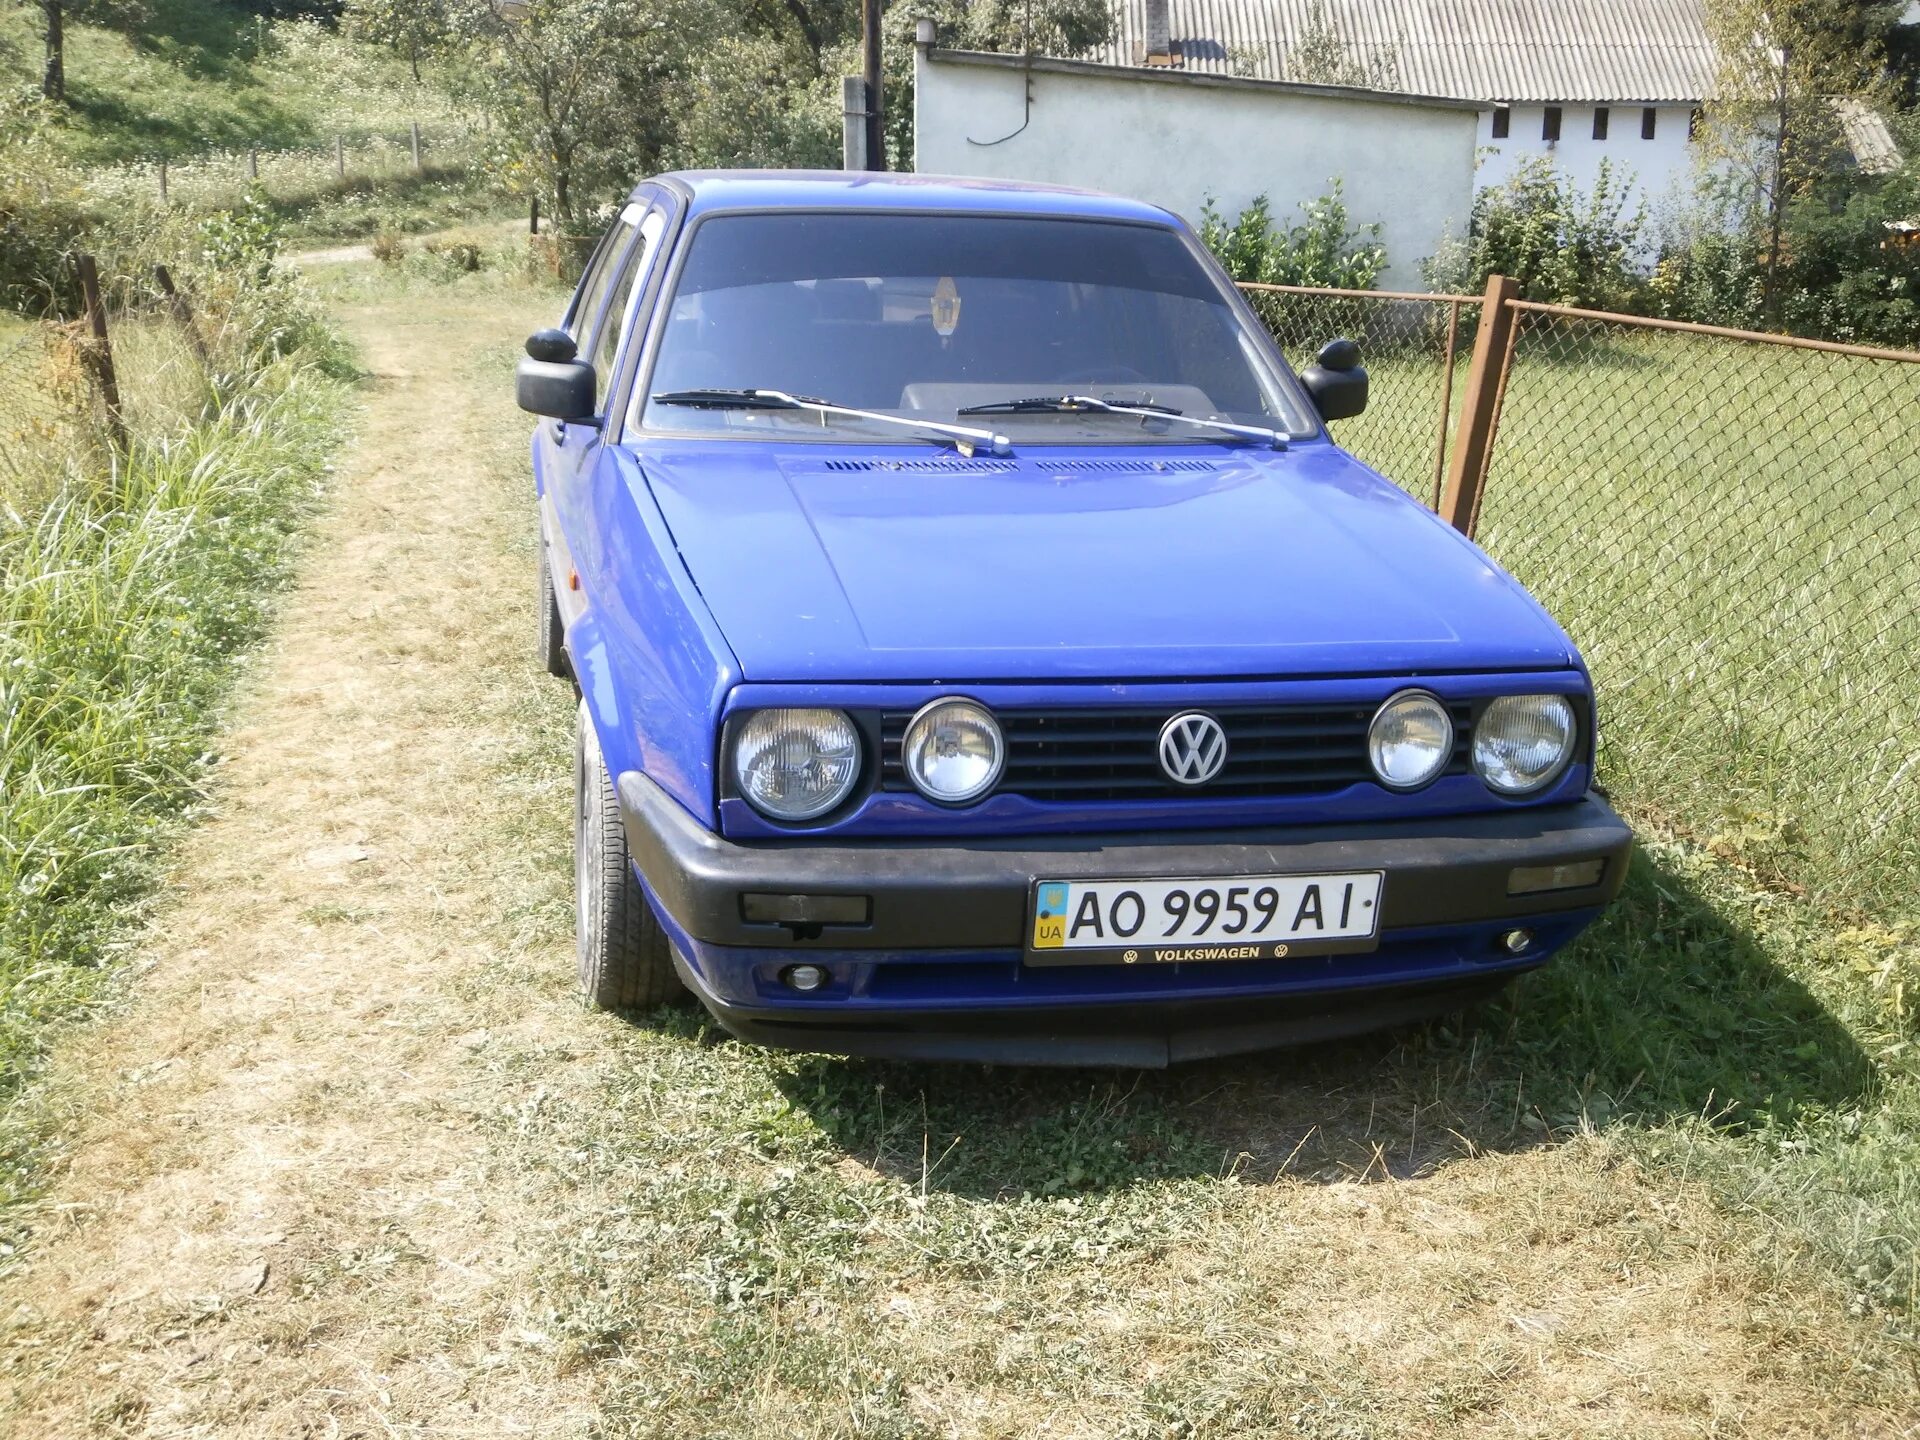 Фольксваген Джетта 1986. Фольксваген Джетта 1986 года. Volkswagen Jetta Coupe 1985. Volkswagen Jetta 1986 года синего цвета. Джетта 1986